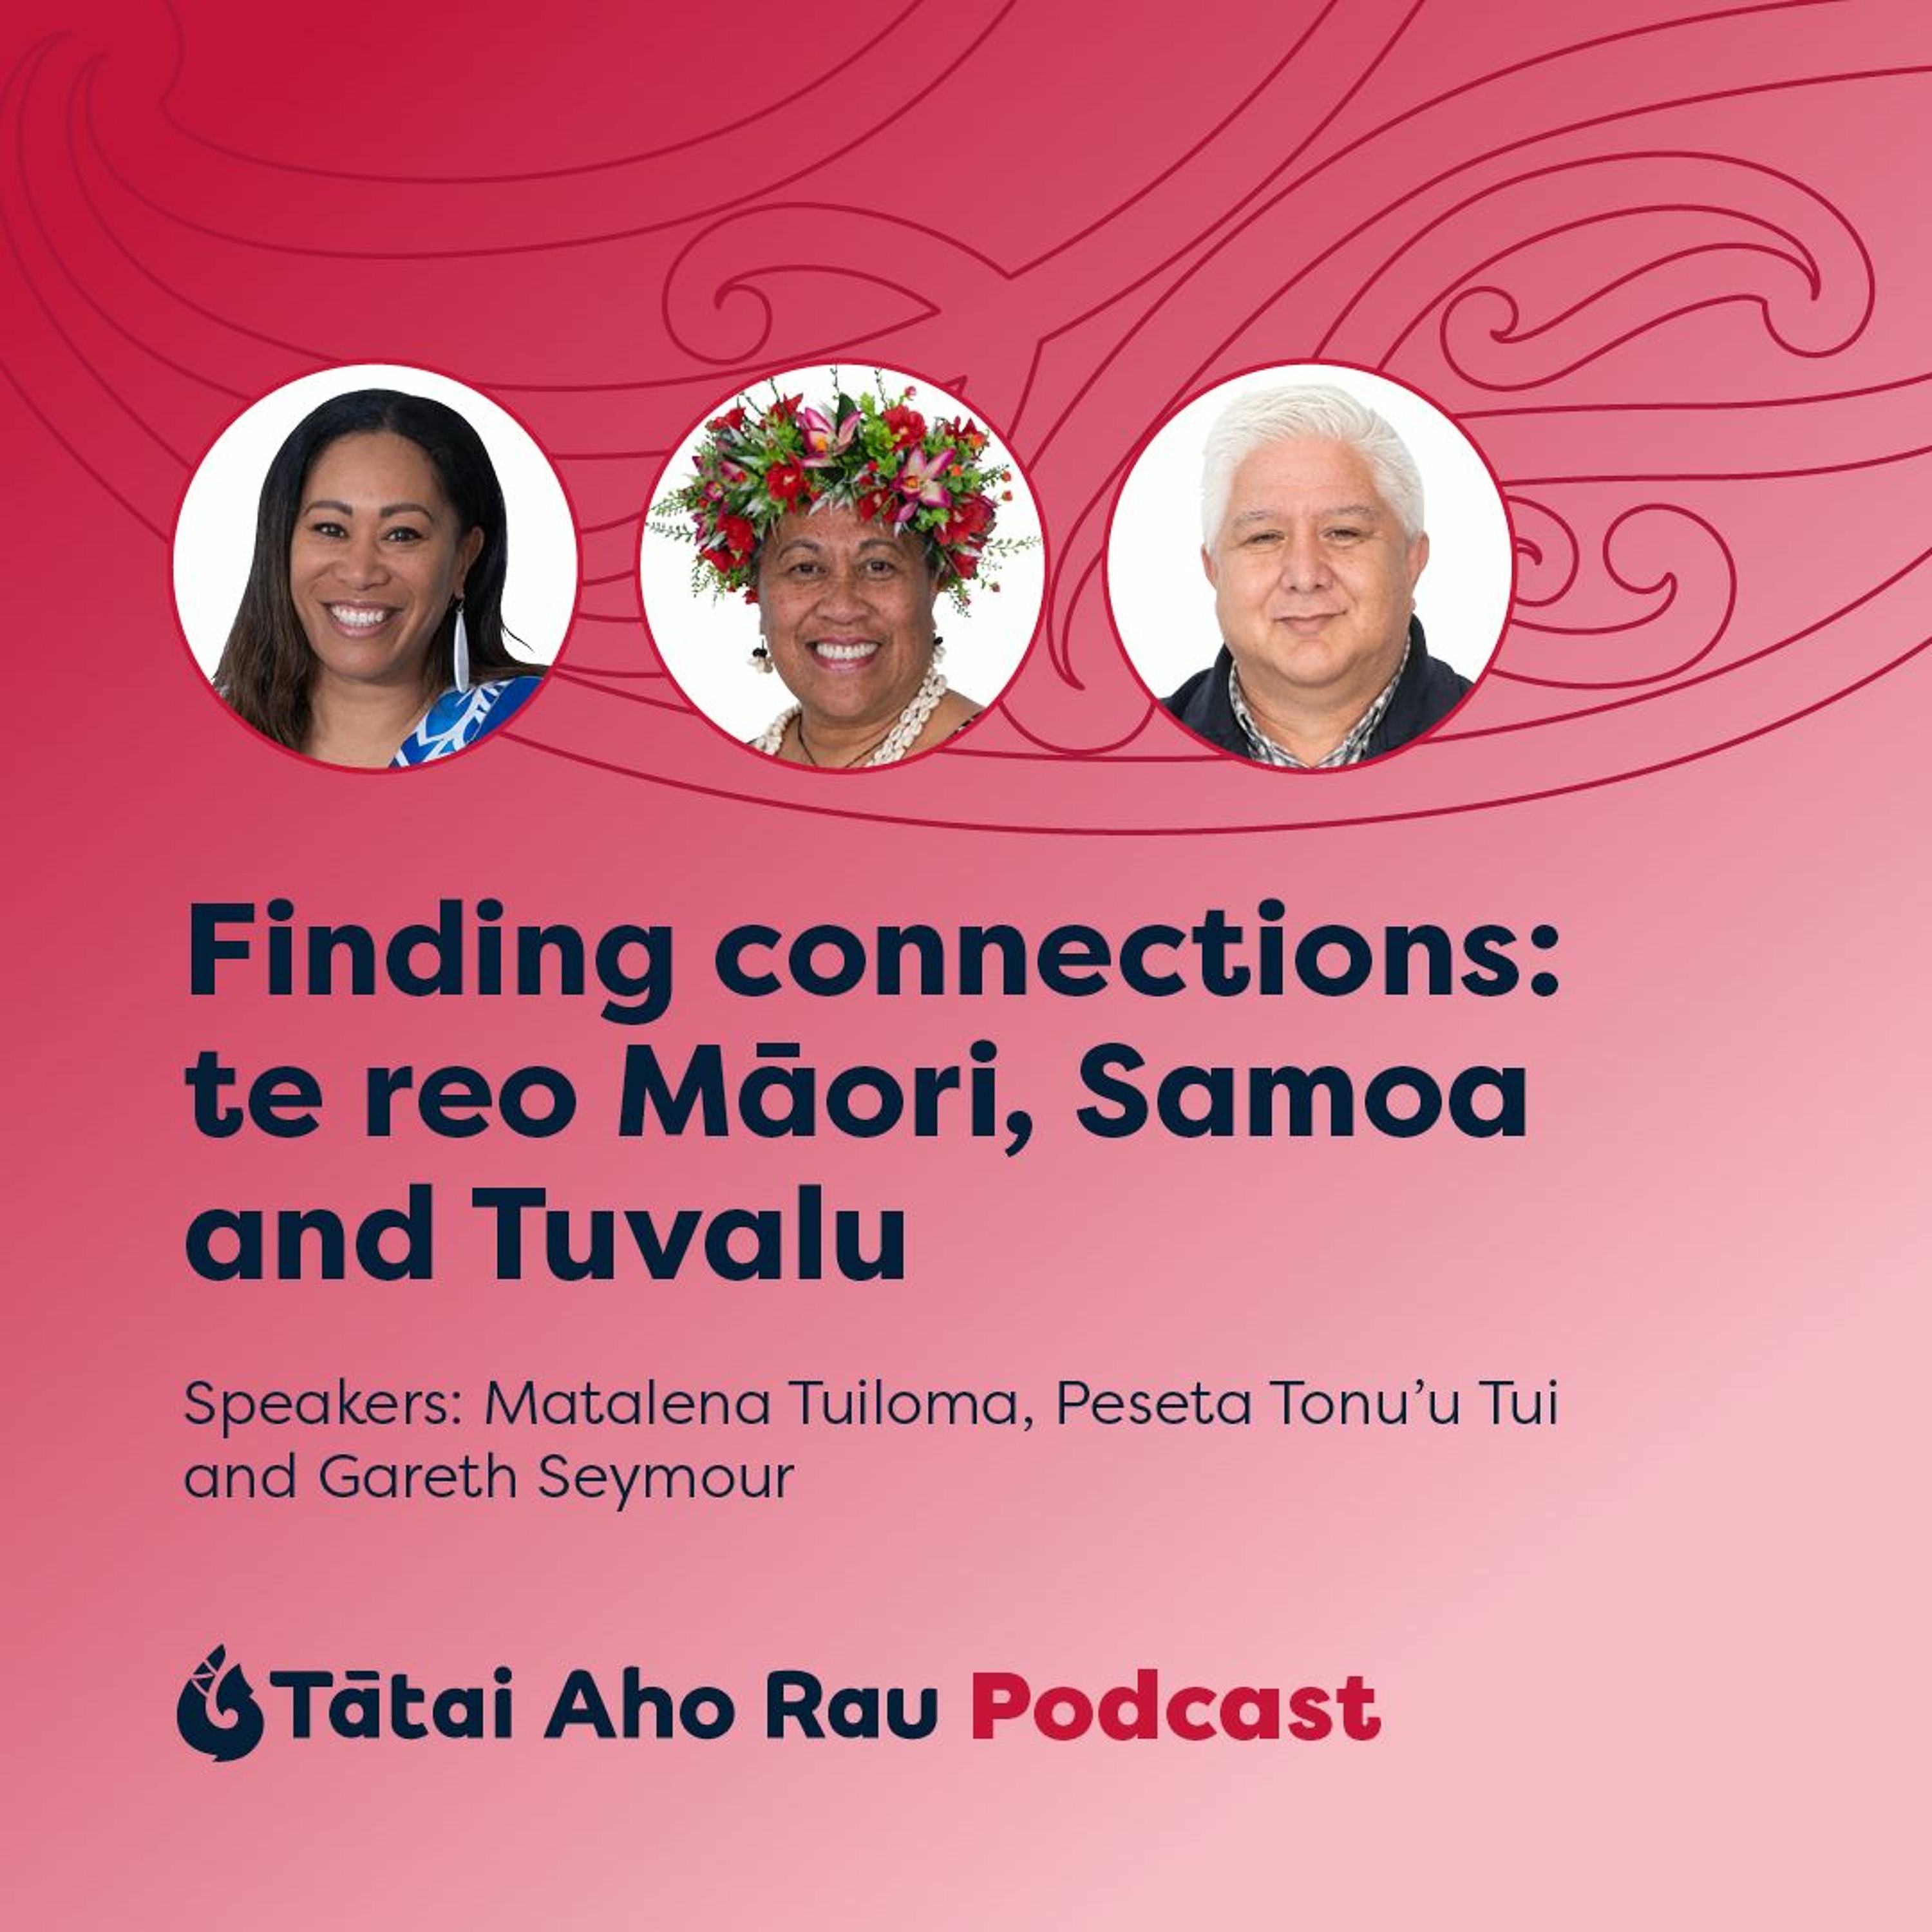 Finding connections: te reo Māori, Samoa and Tuvalu